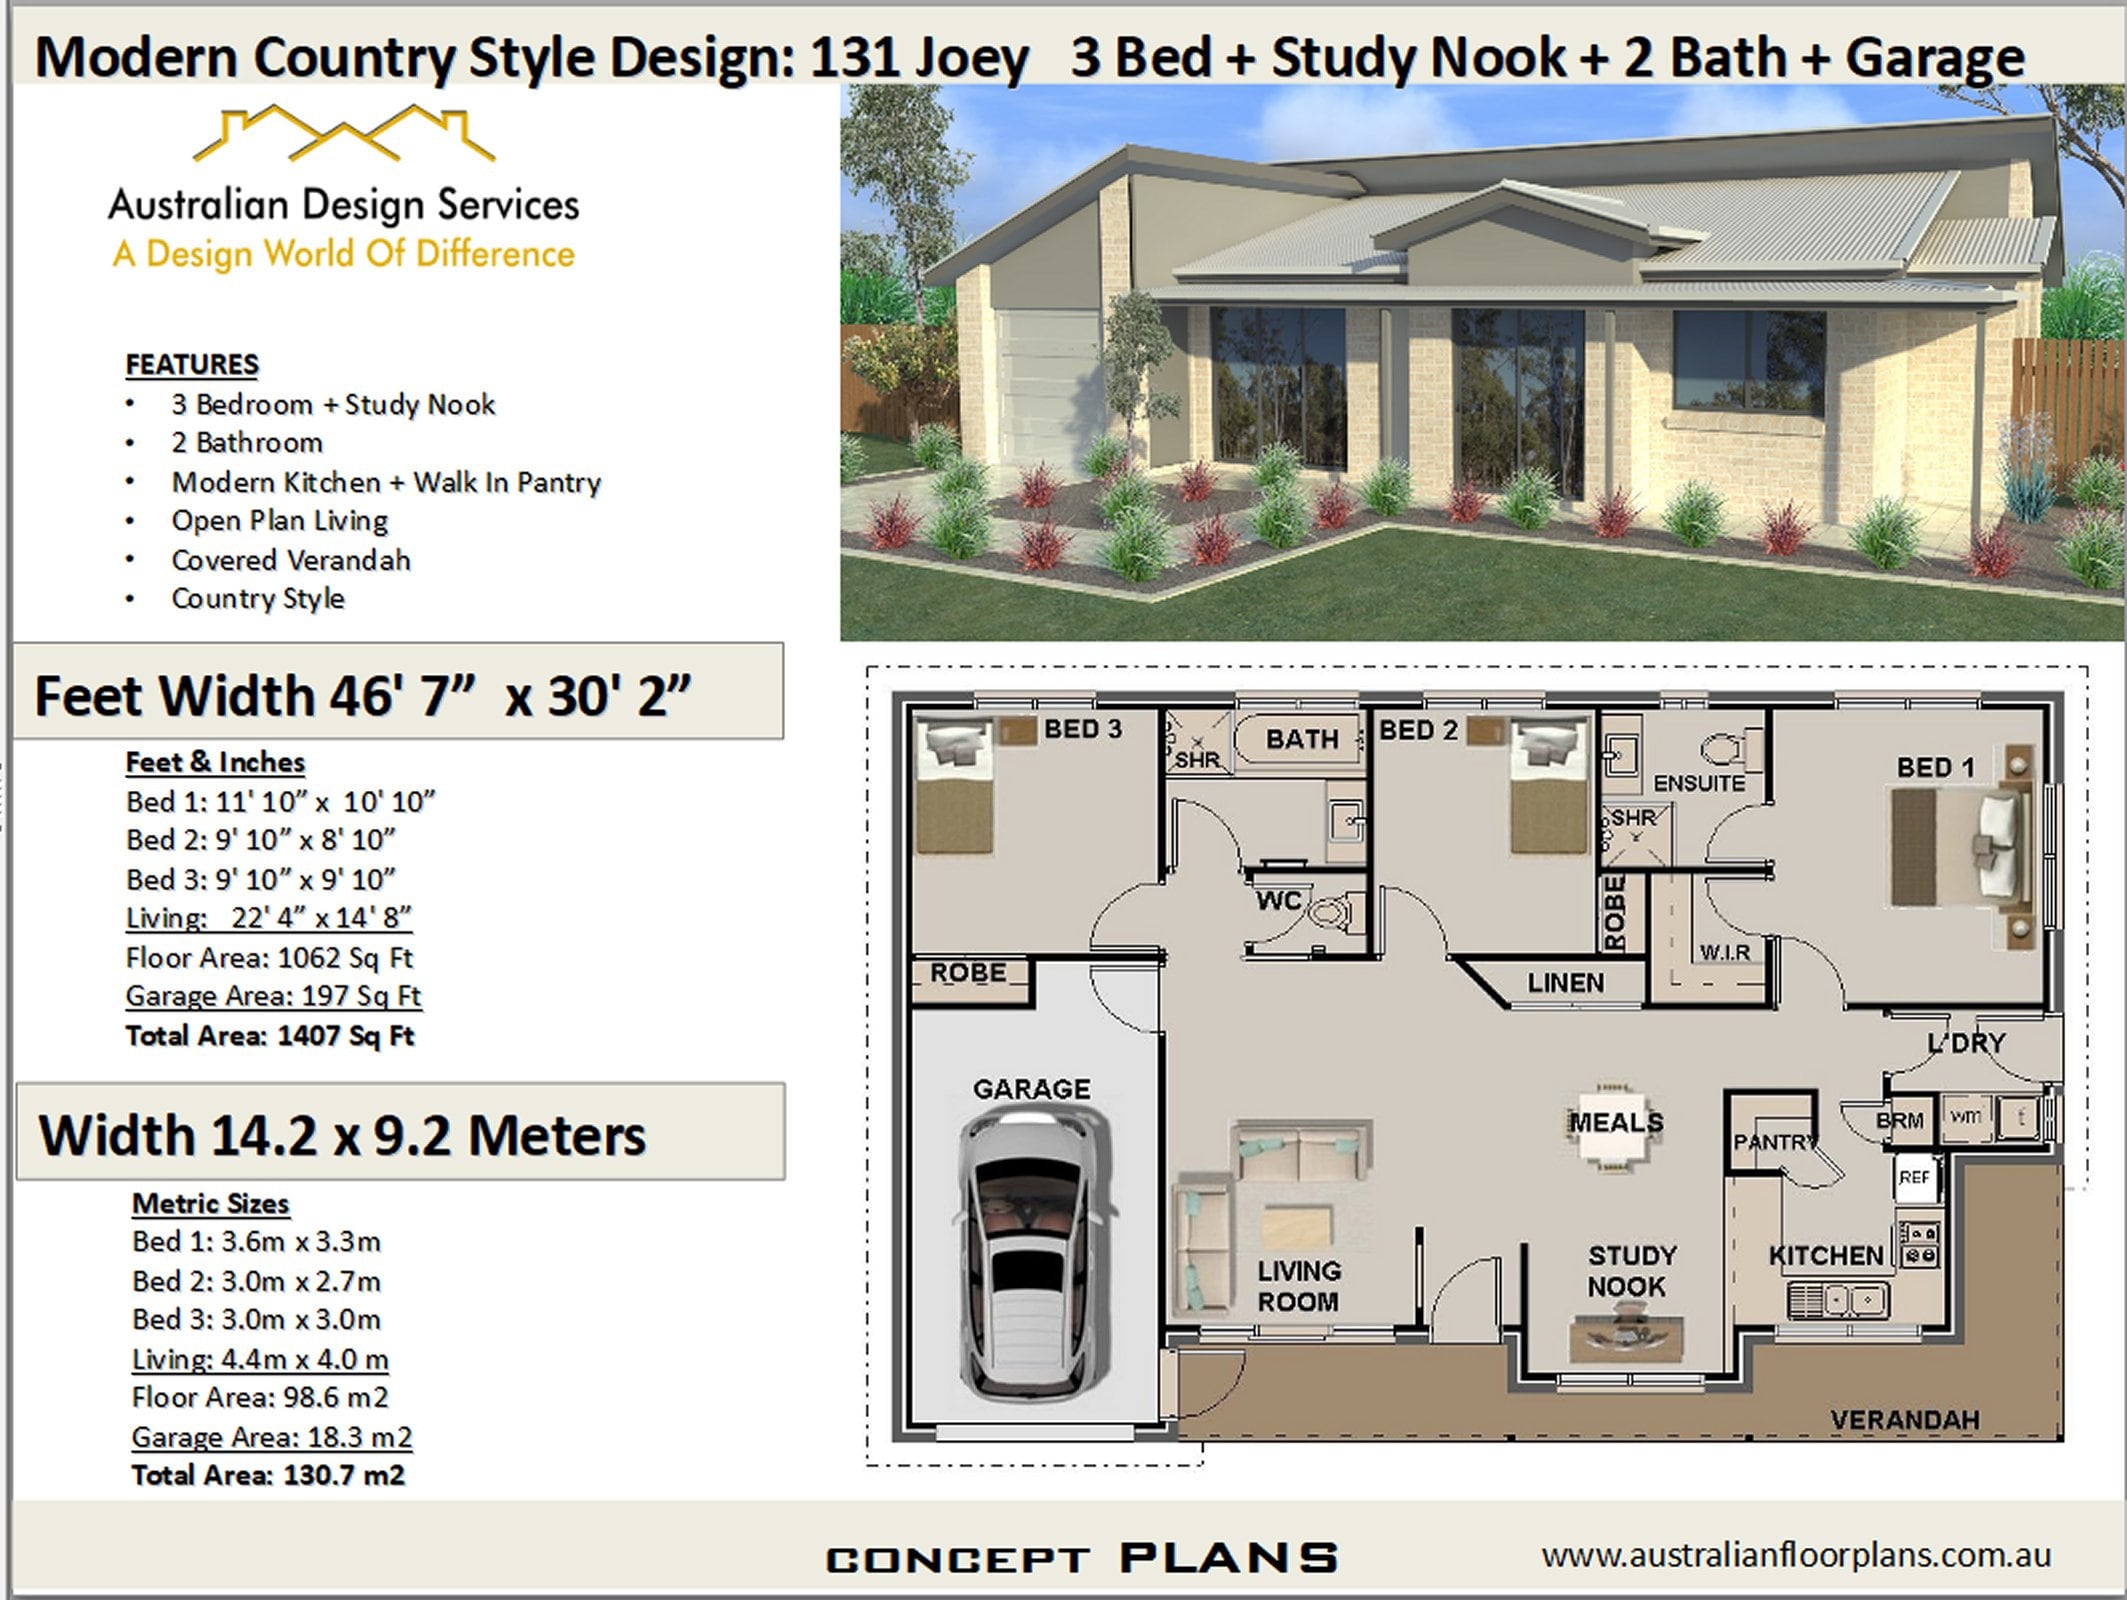 1062 Sq Foot House Plan Or 98.6 M2 3 Bedroom 2 Bathroom - Etsy